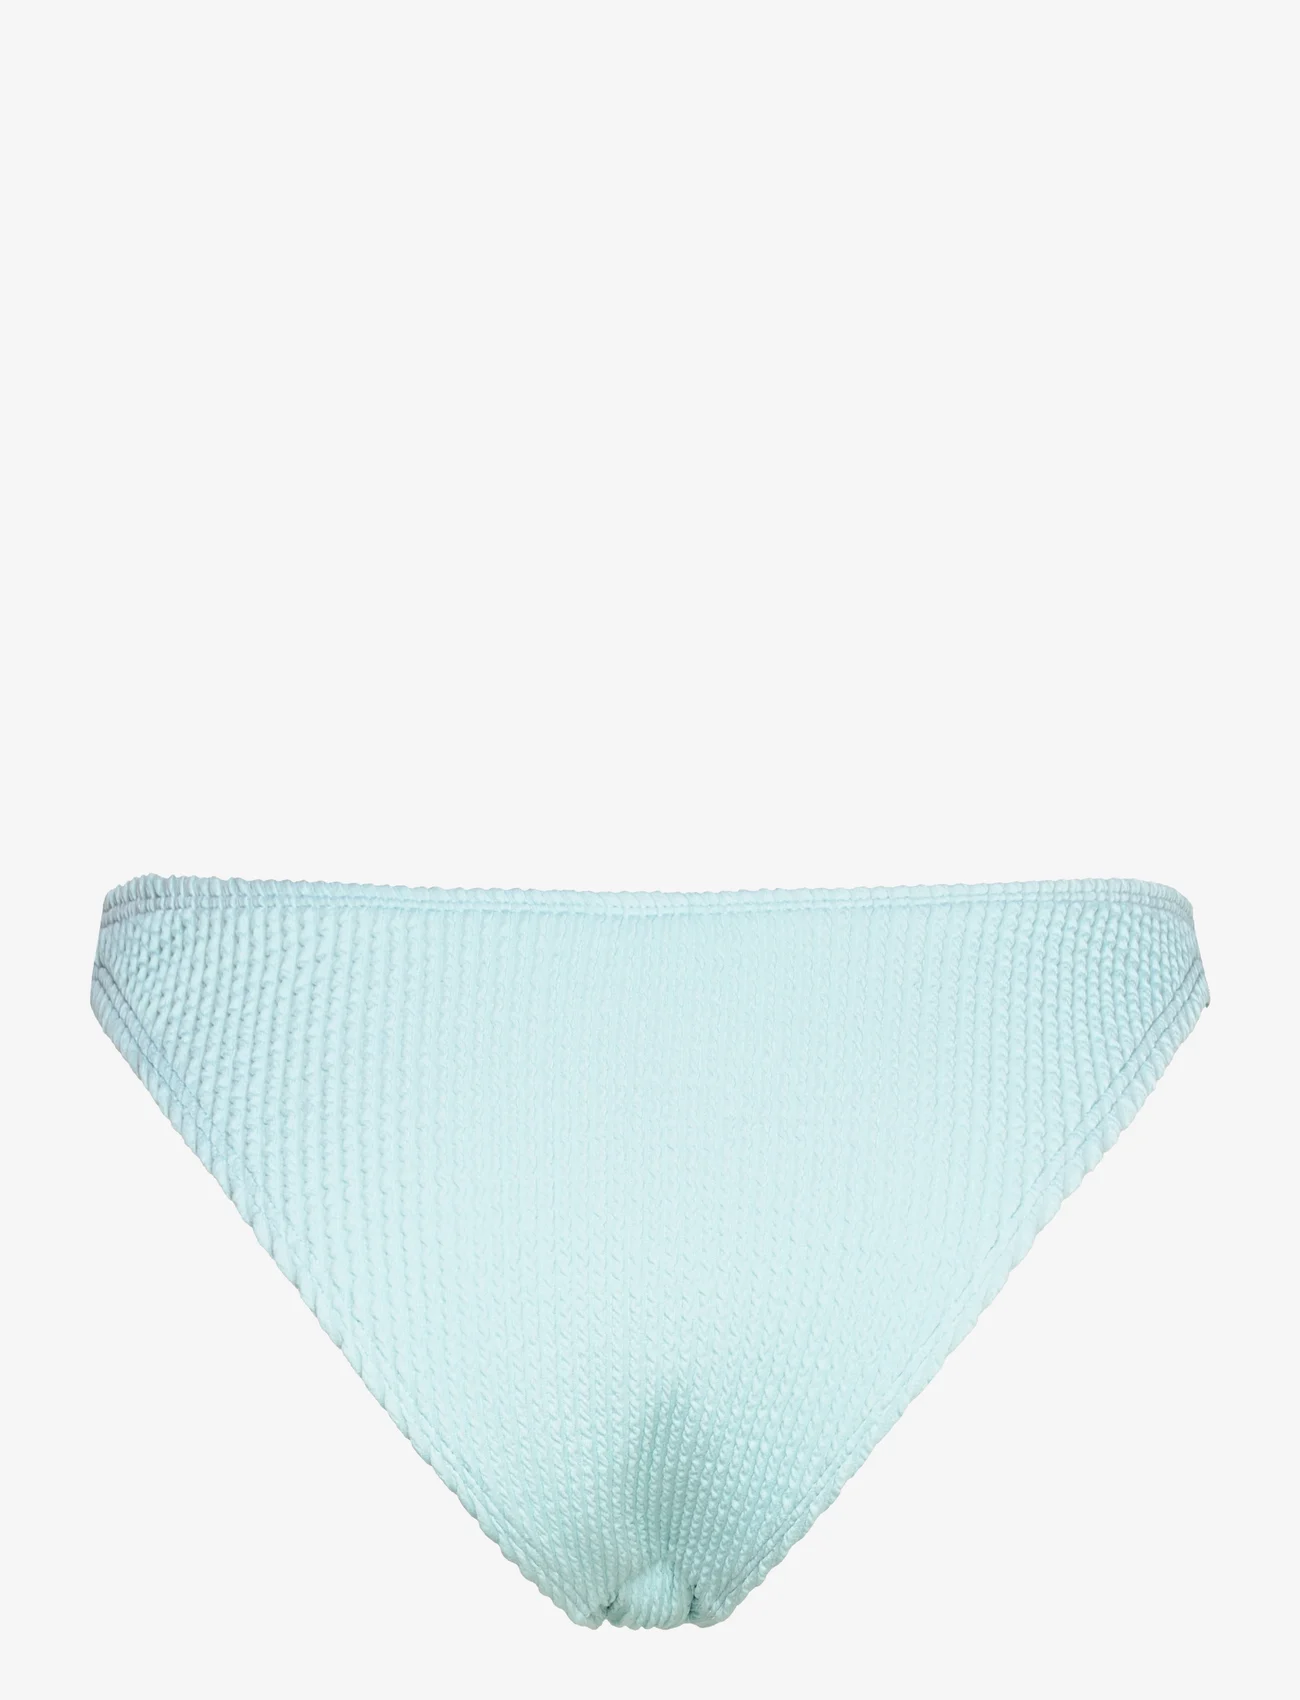 Hunkemöller - Crinkle high leg r - bikini briefs - azur blue - 1